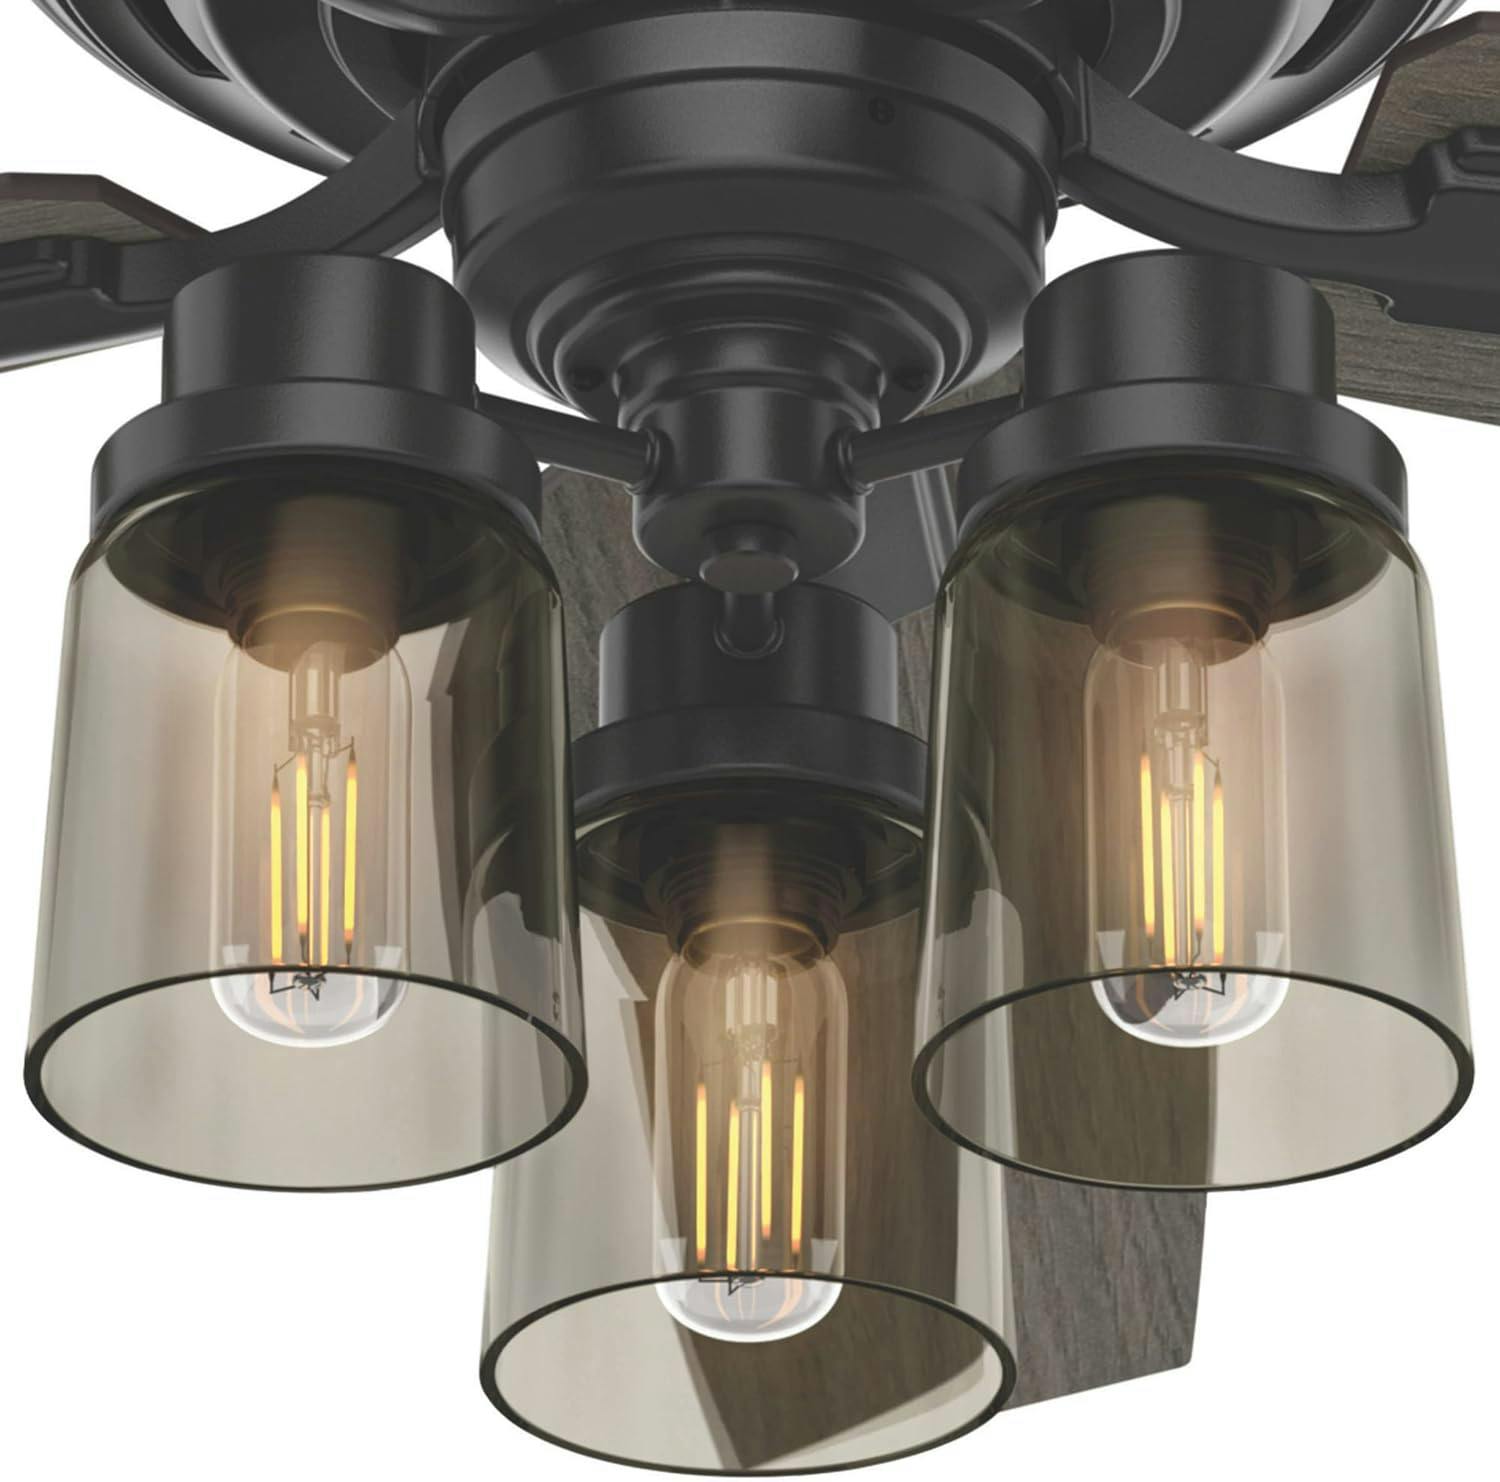 Bennett 52" Matte Black Modern Ceiling Fan with LED Light and Remote